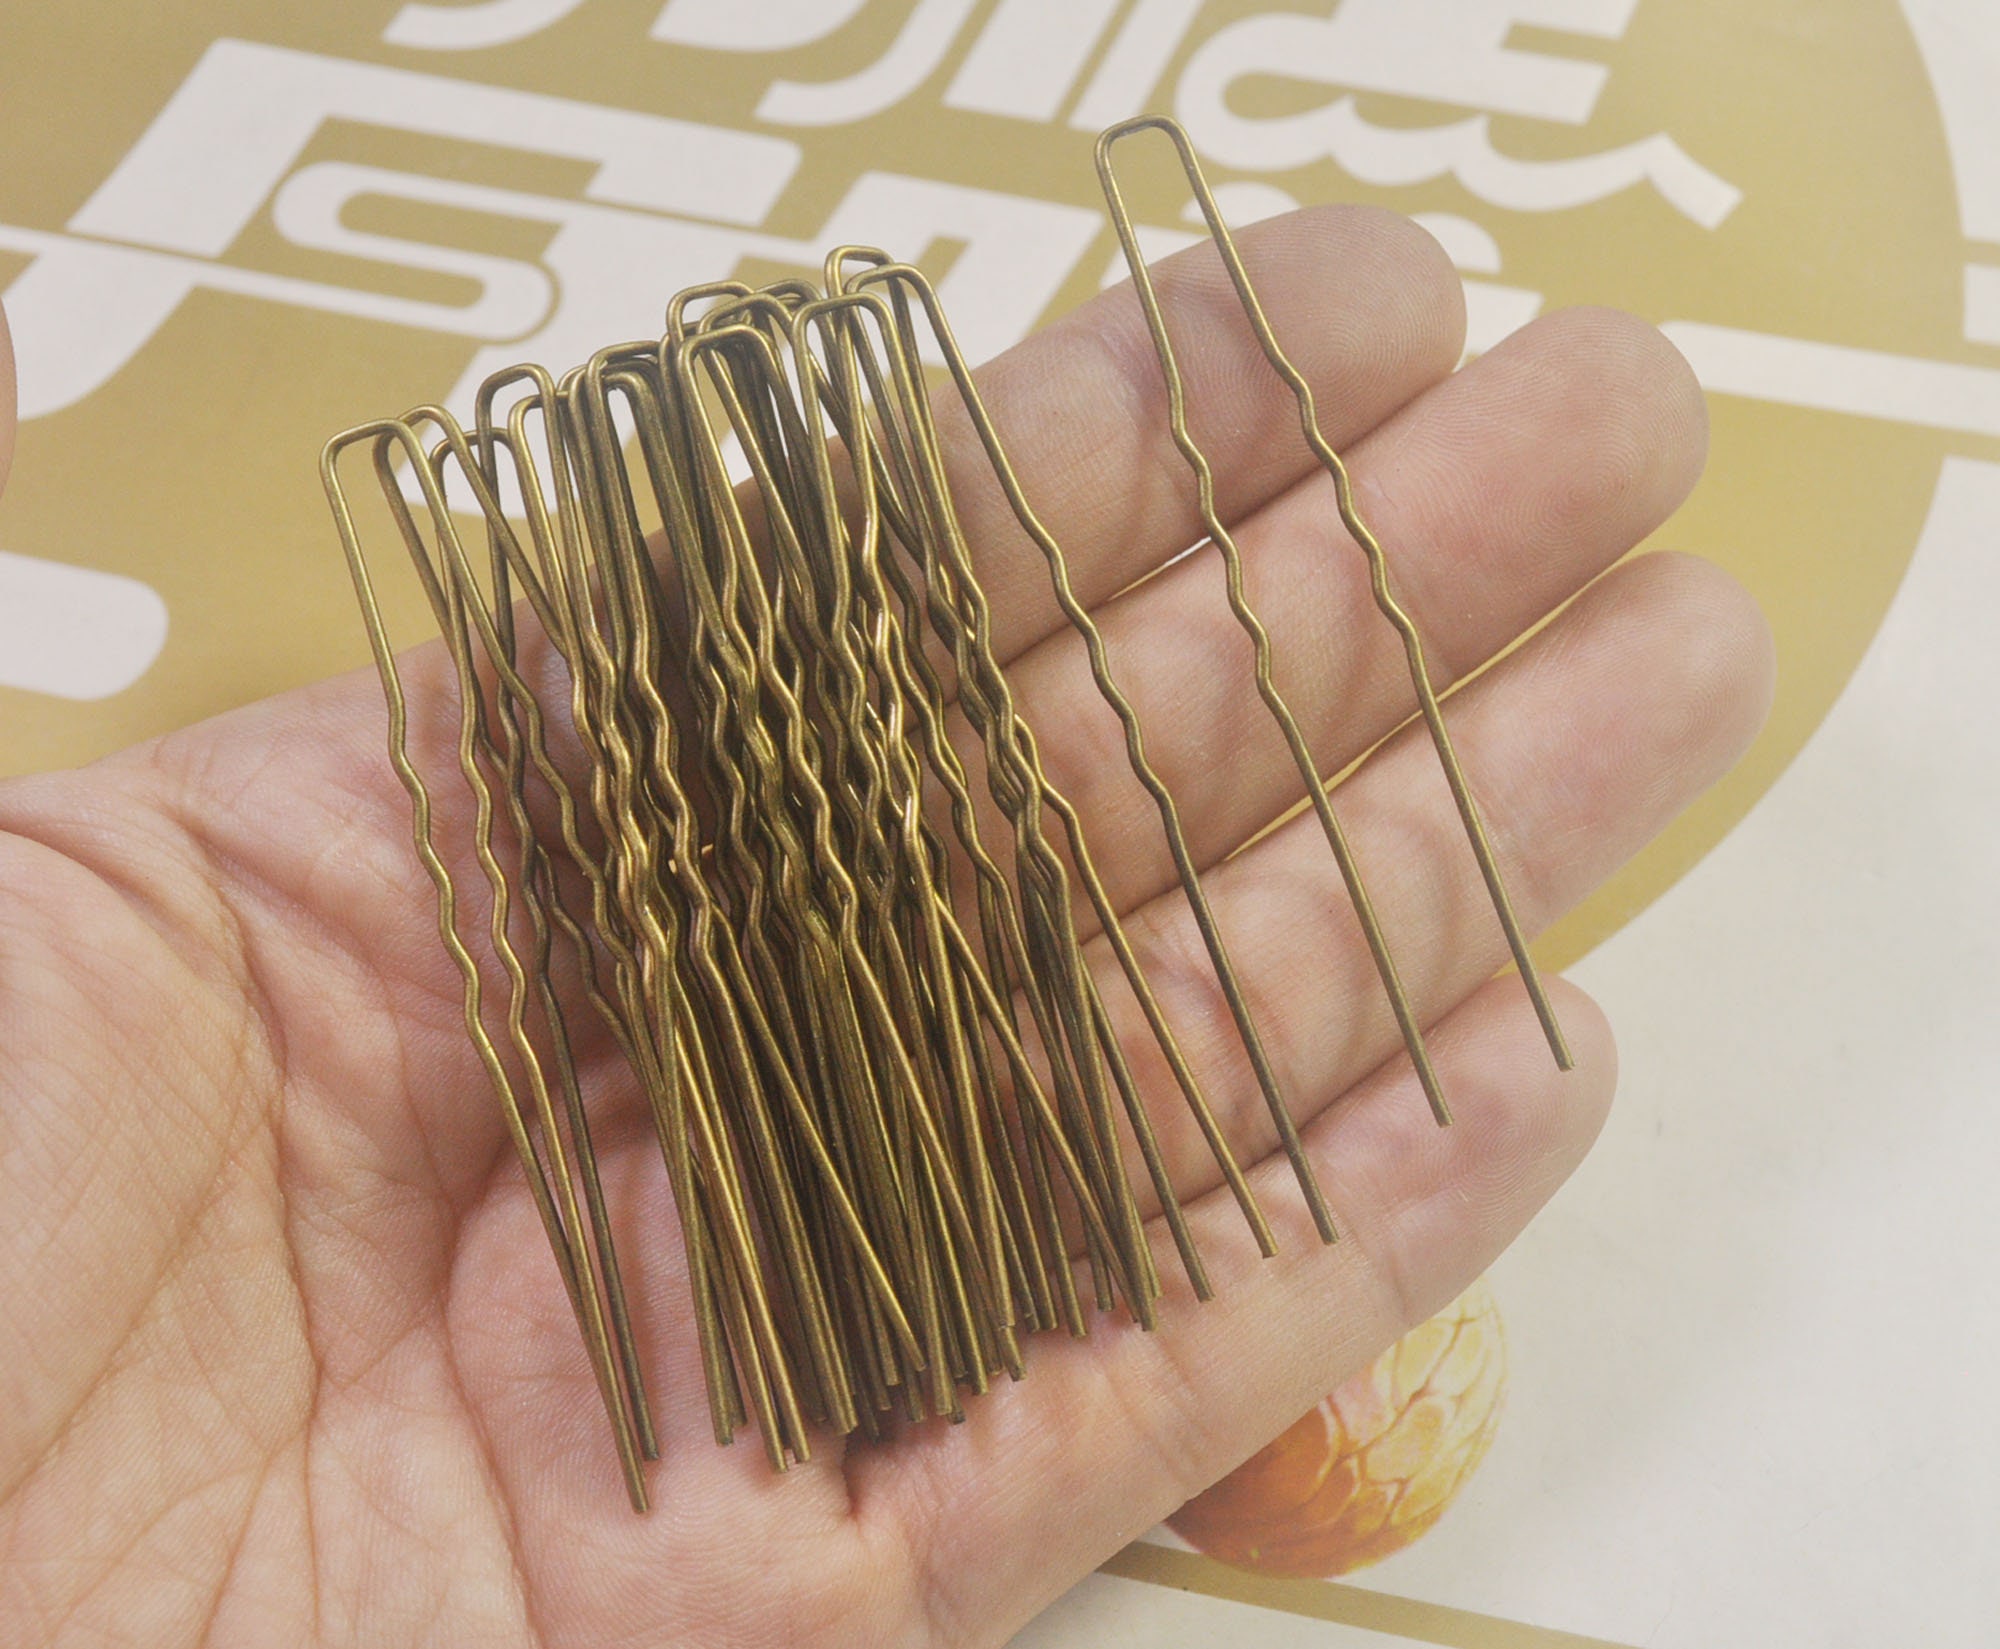 Gold U Hair Pin--50 PC Gold Metal Hair Pins (nickel and lead free)  64mm,Metal Hair Pins for Bridal Hair Pieces and Fascinators.